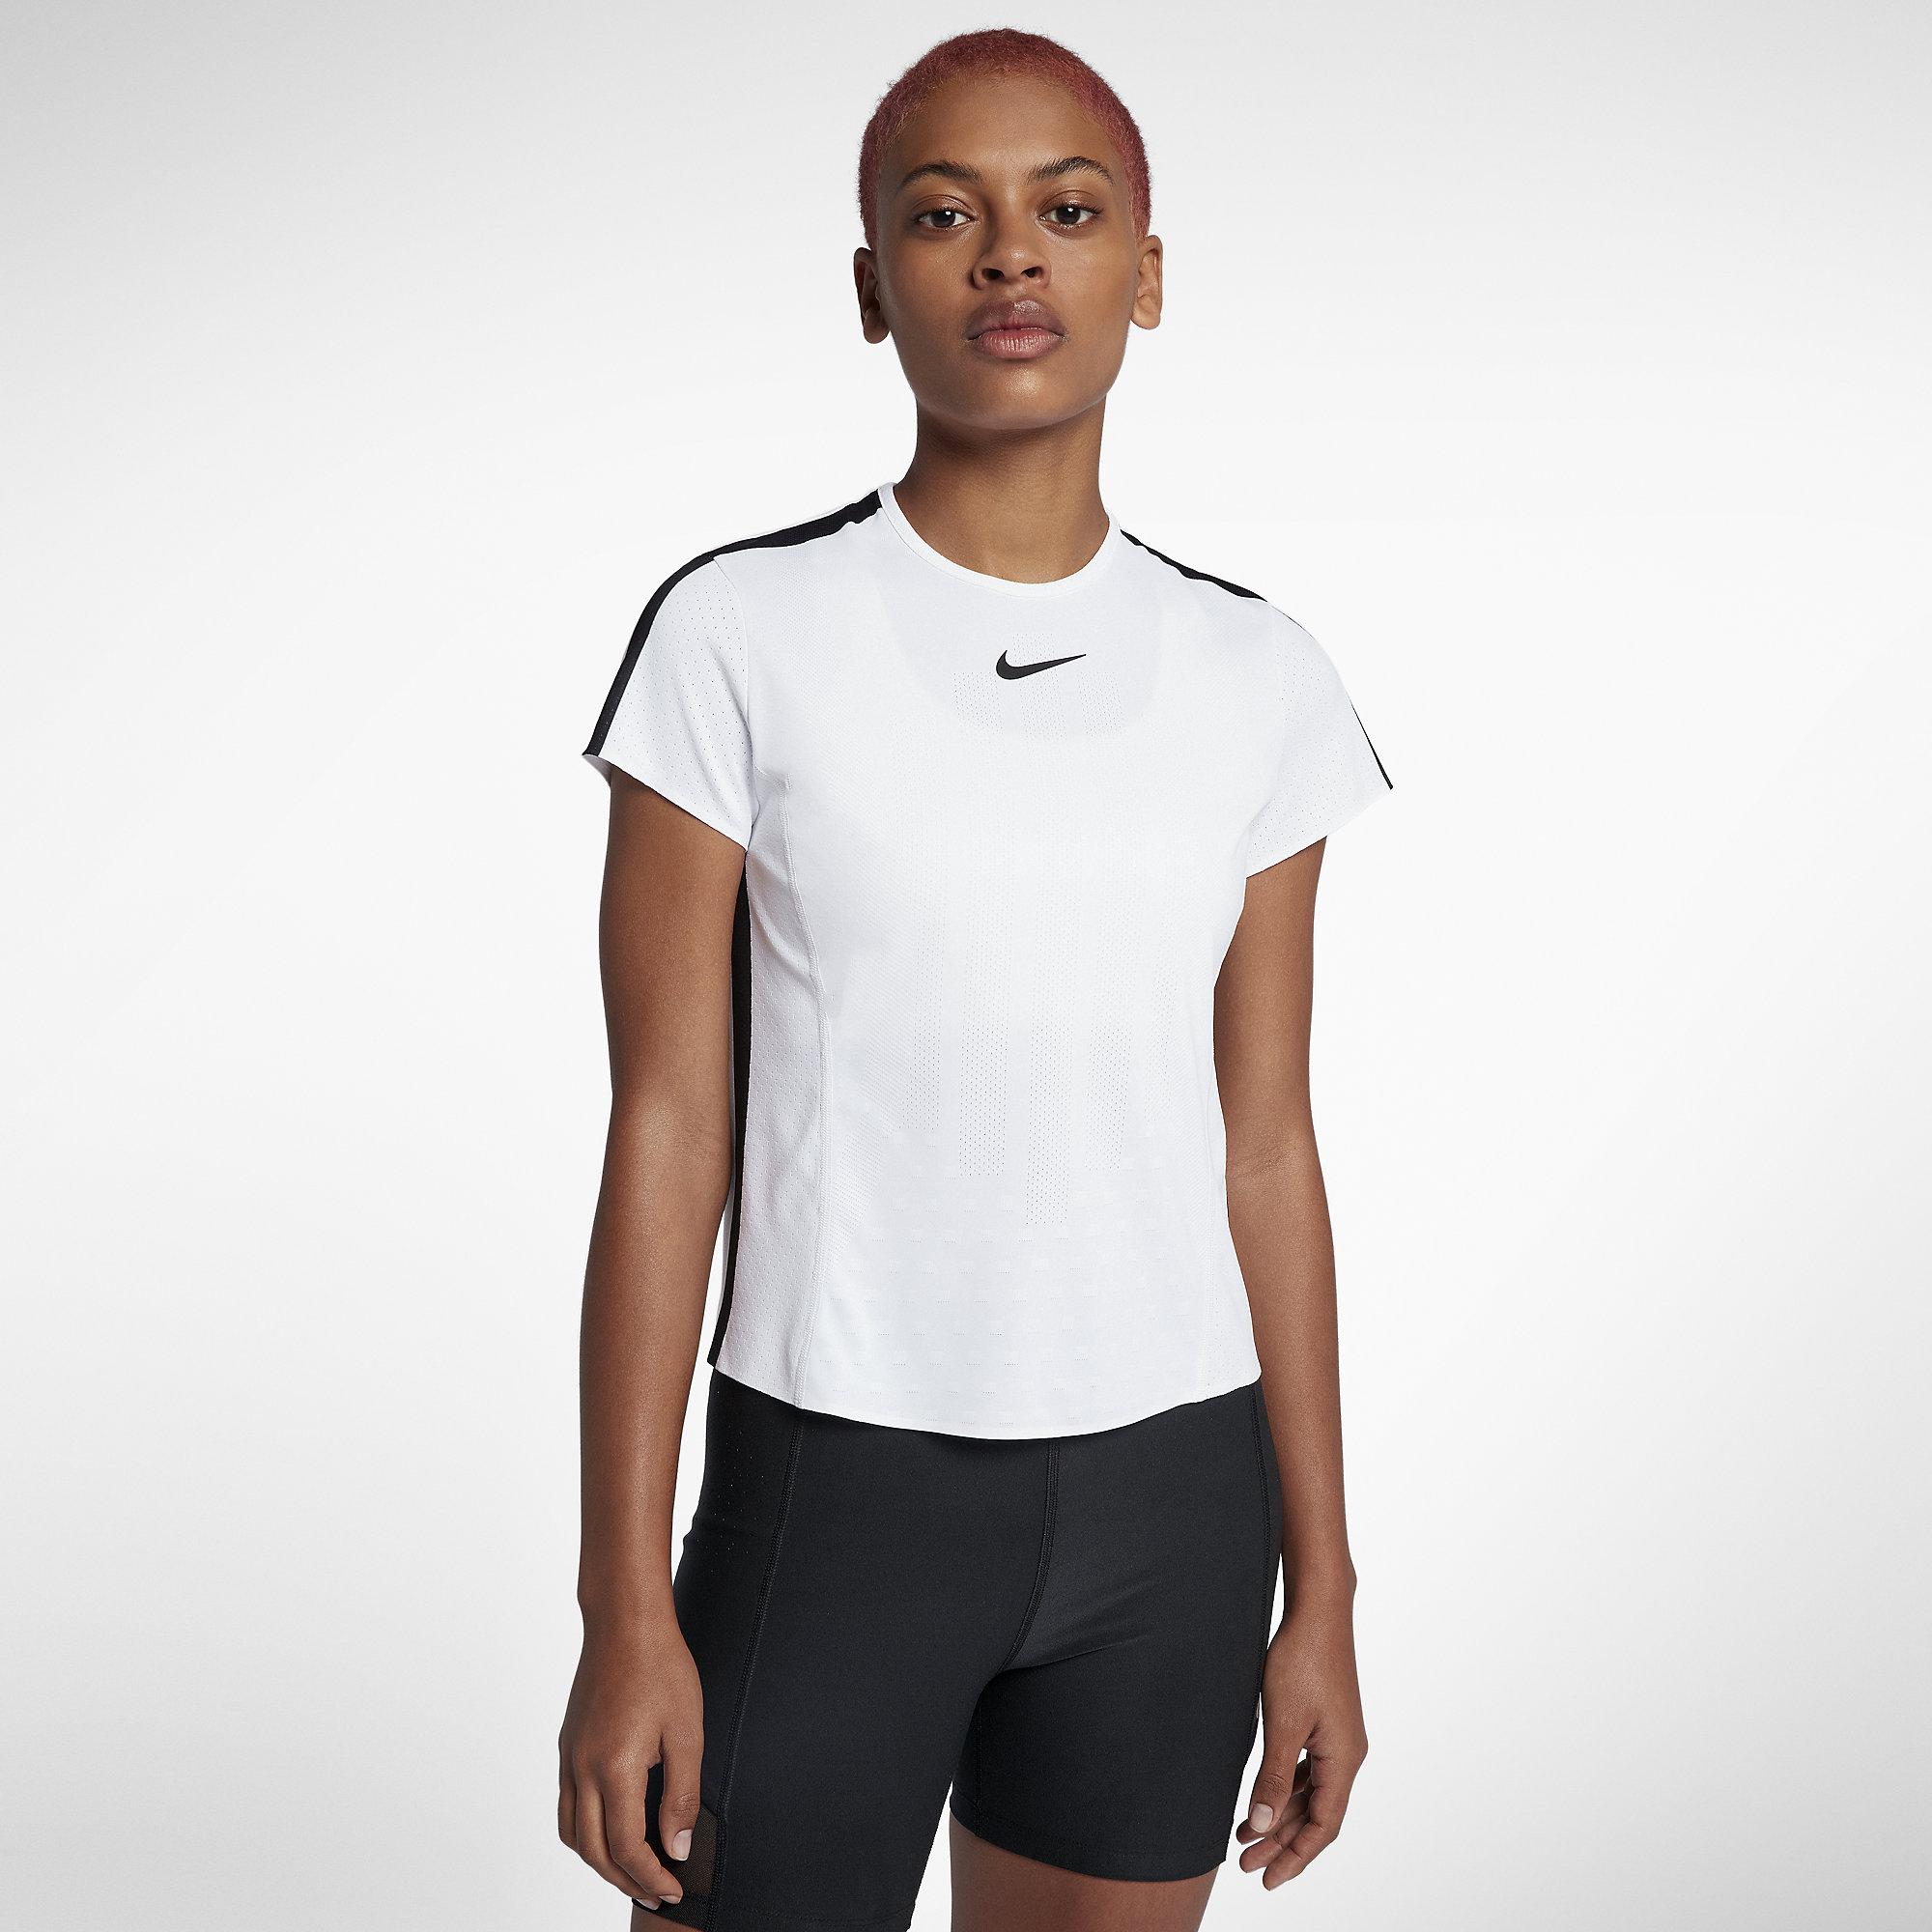 Nike Womens Zonal Cooling Tennis Top - White/Black - Tennisnuts.com